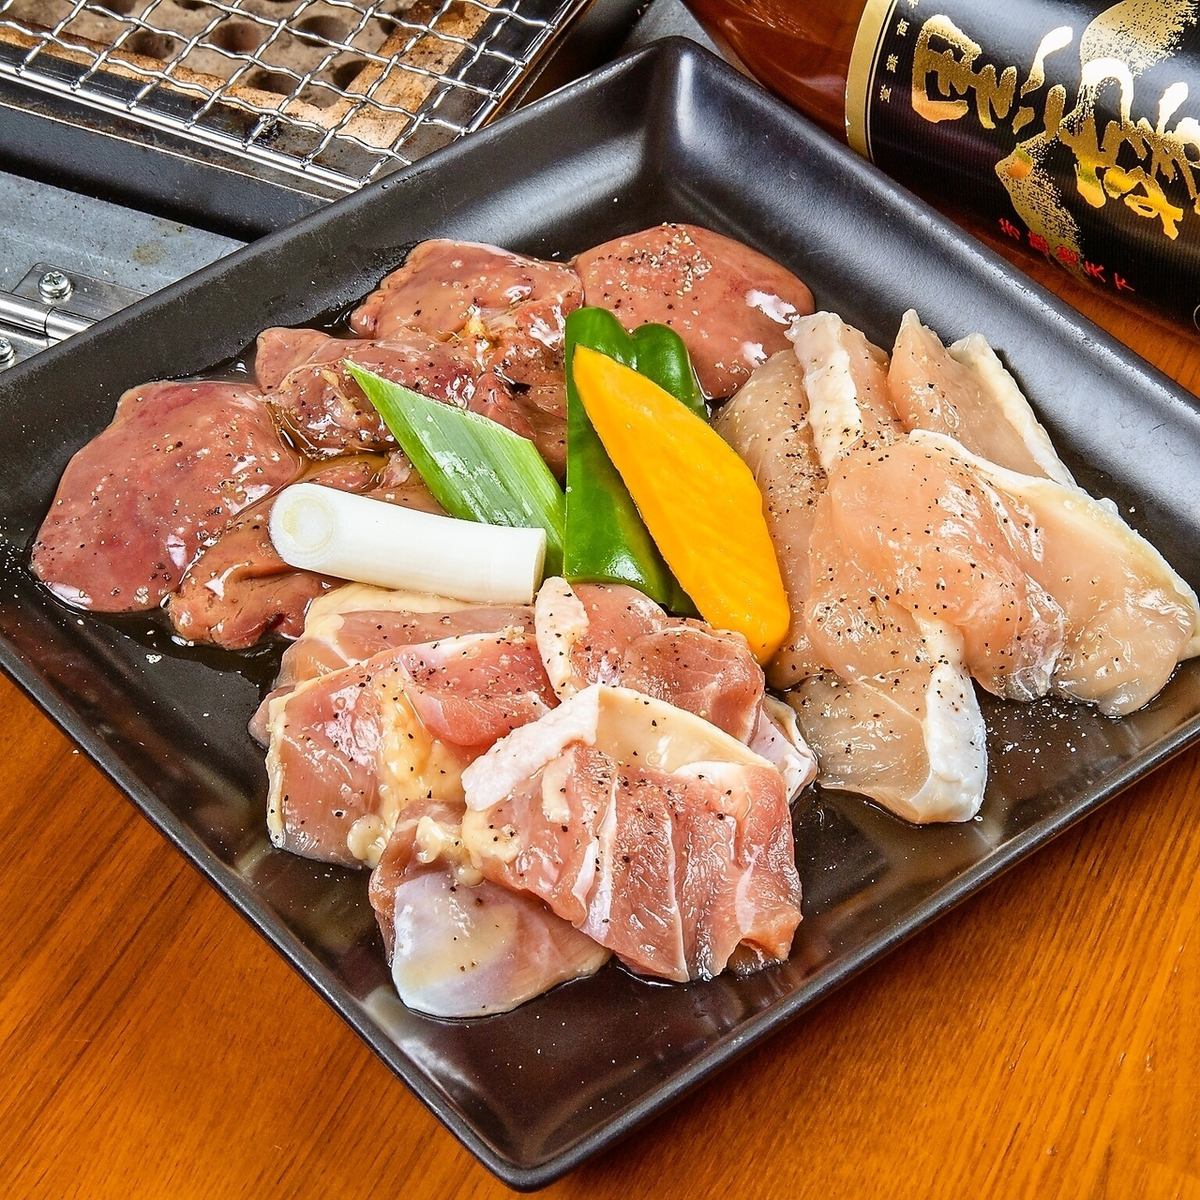 Carefully selected! Please enjoy the fresh Hakata chicken!